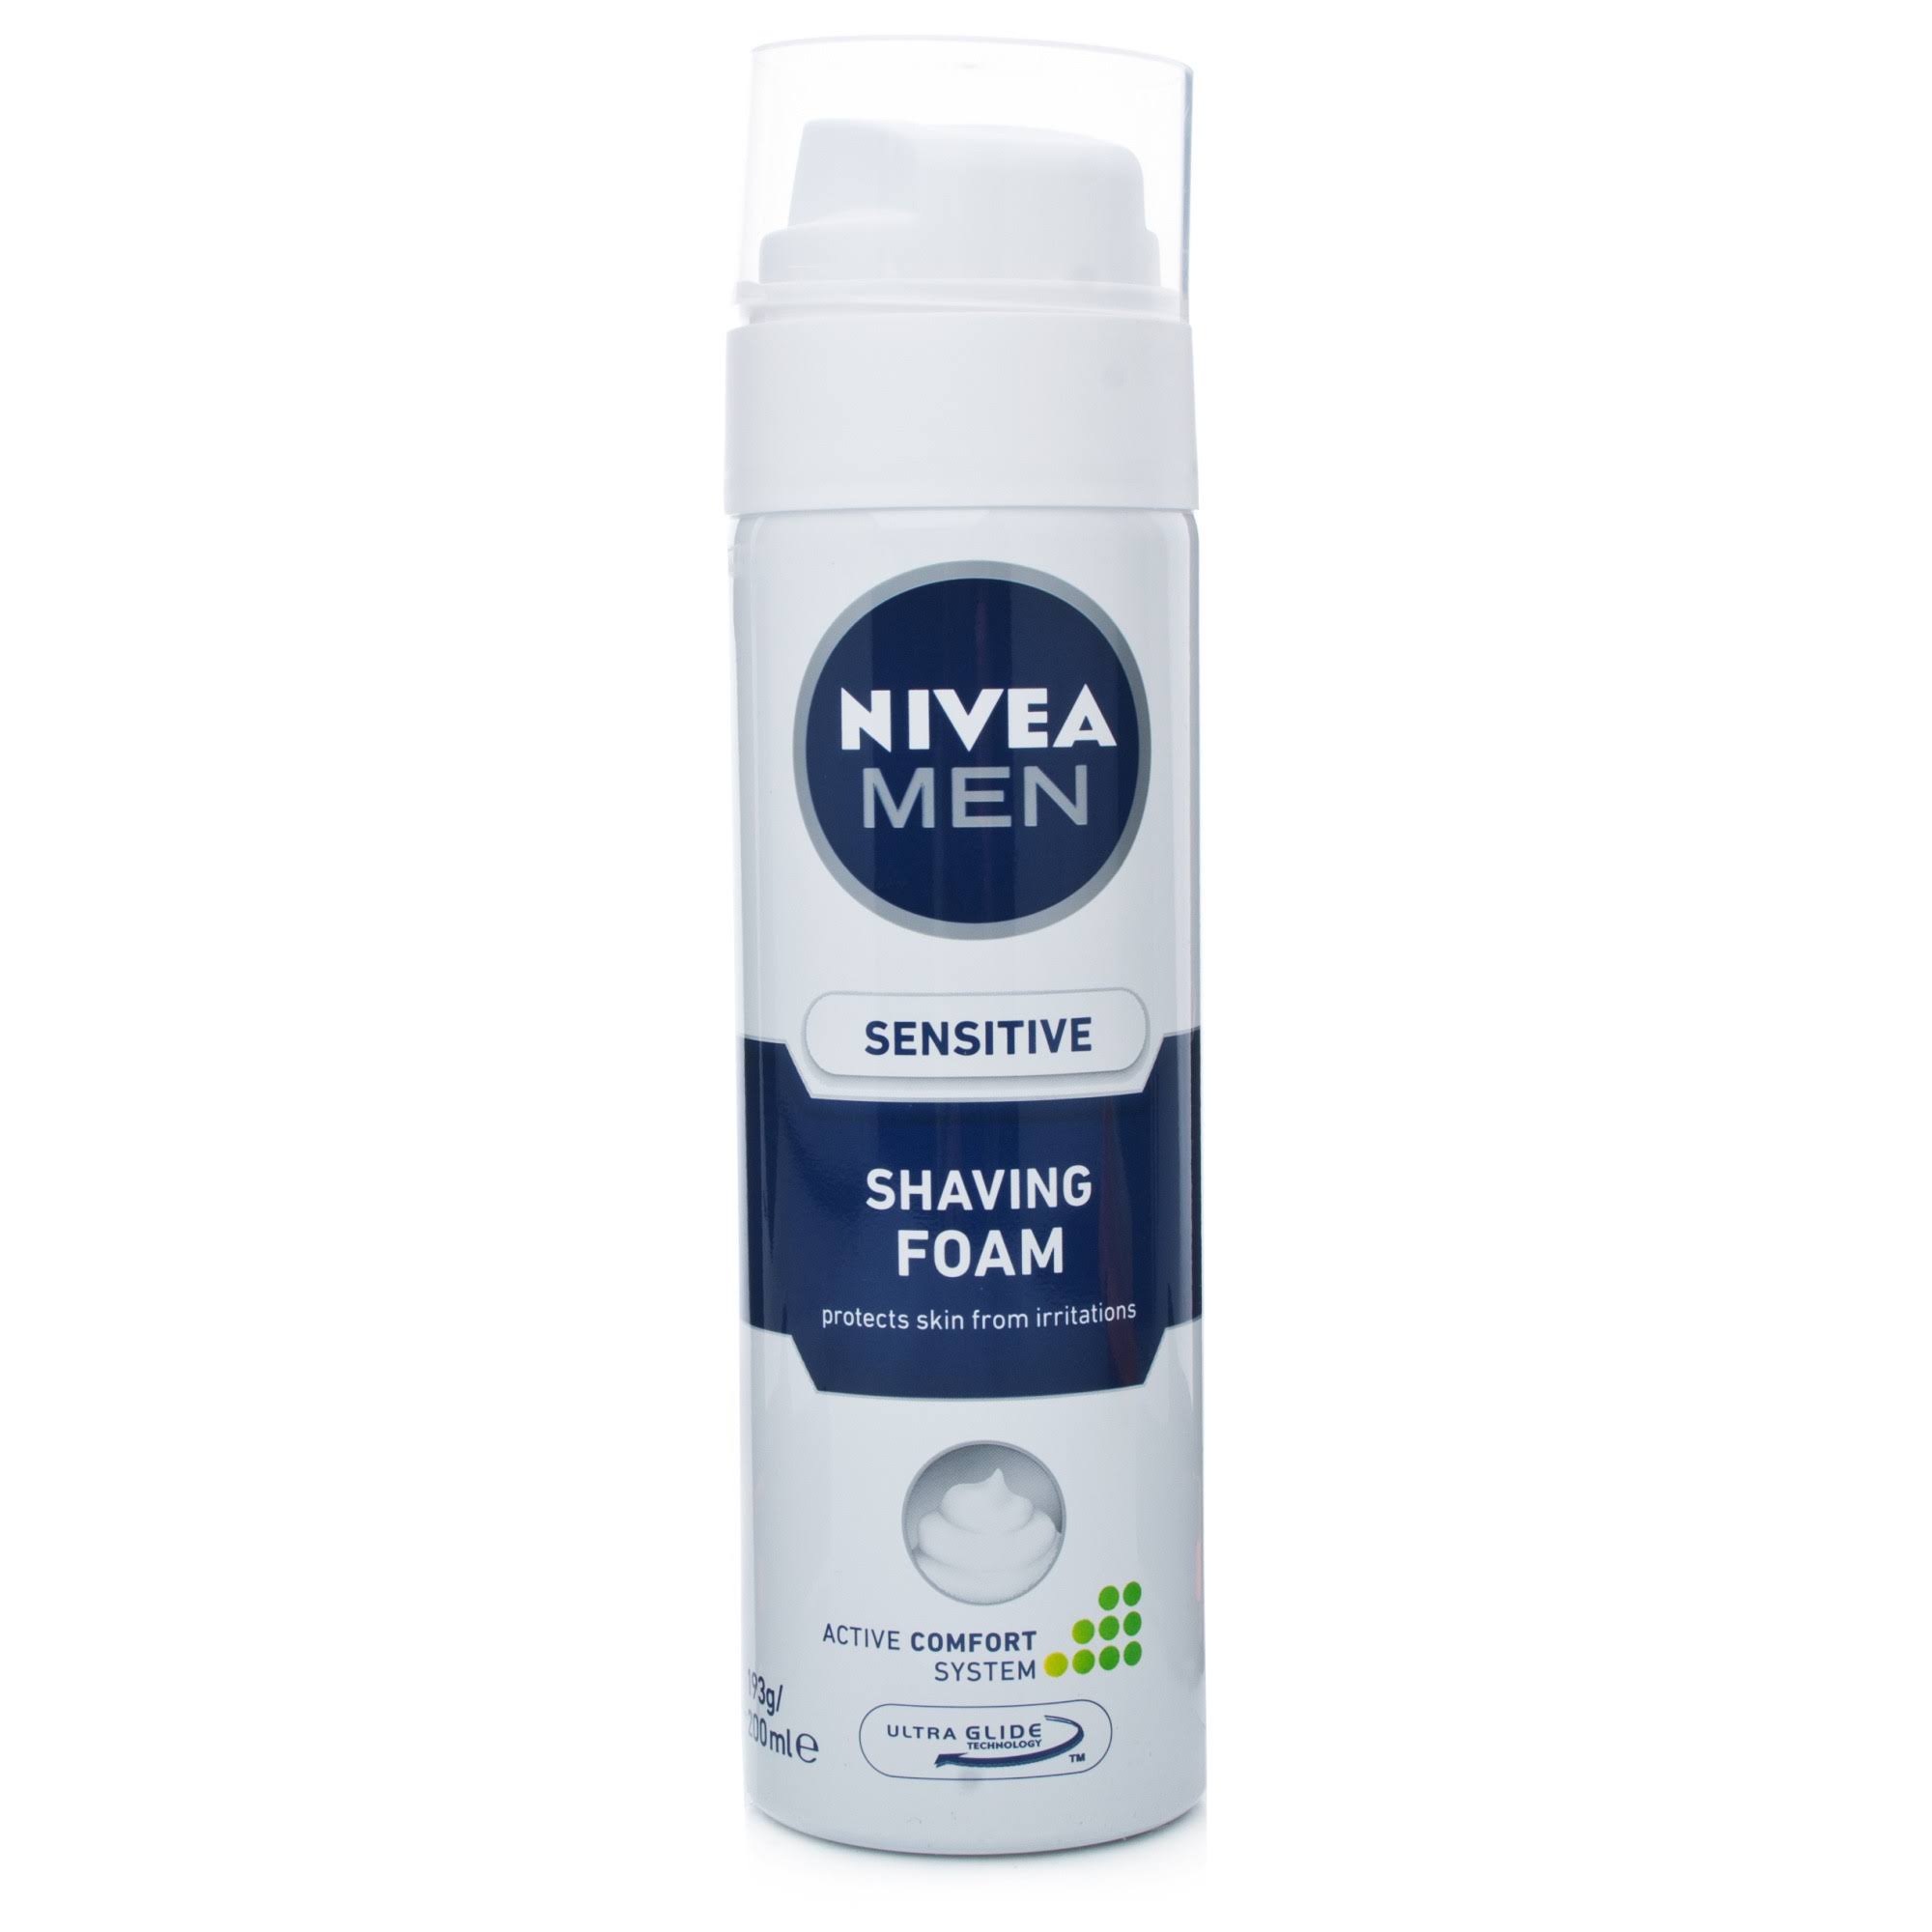 Nivea Men's Sensitive Shaving Foam - 200ml